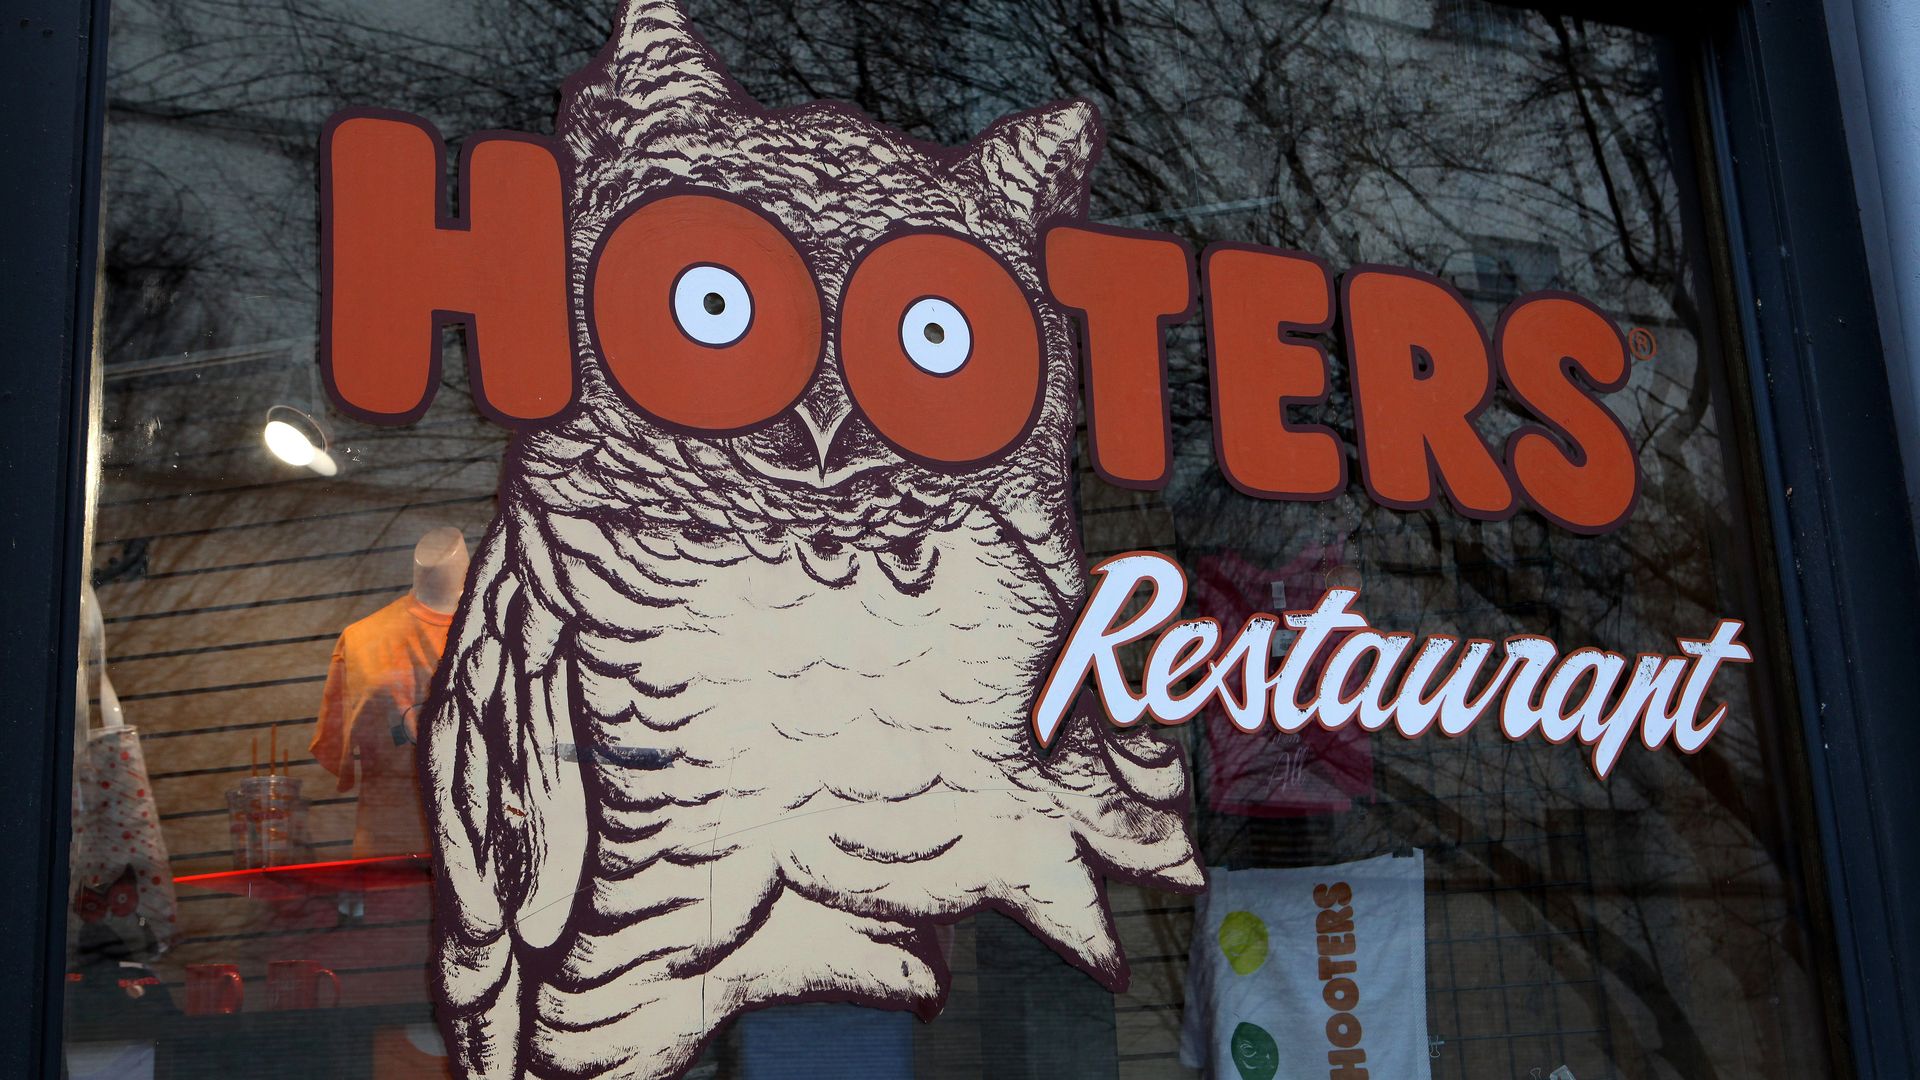 Hooters restaurant logo